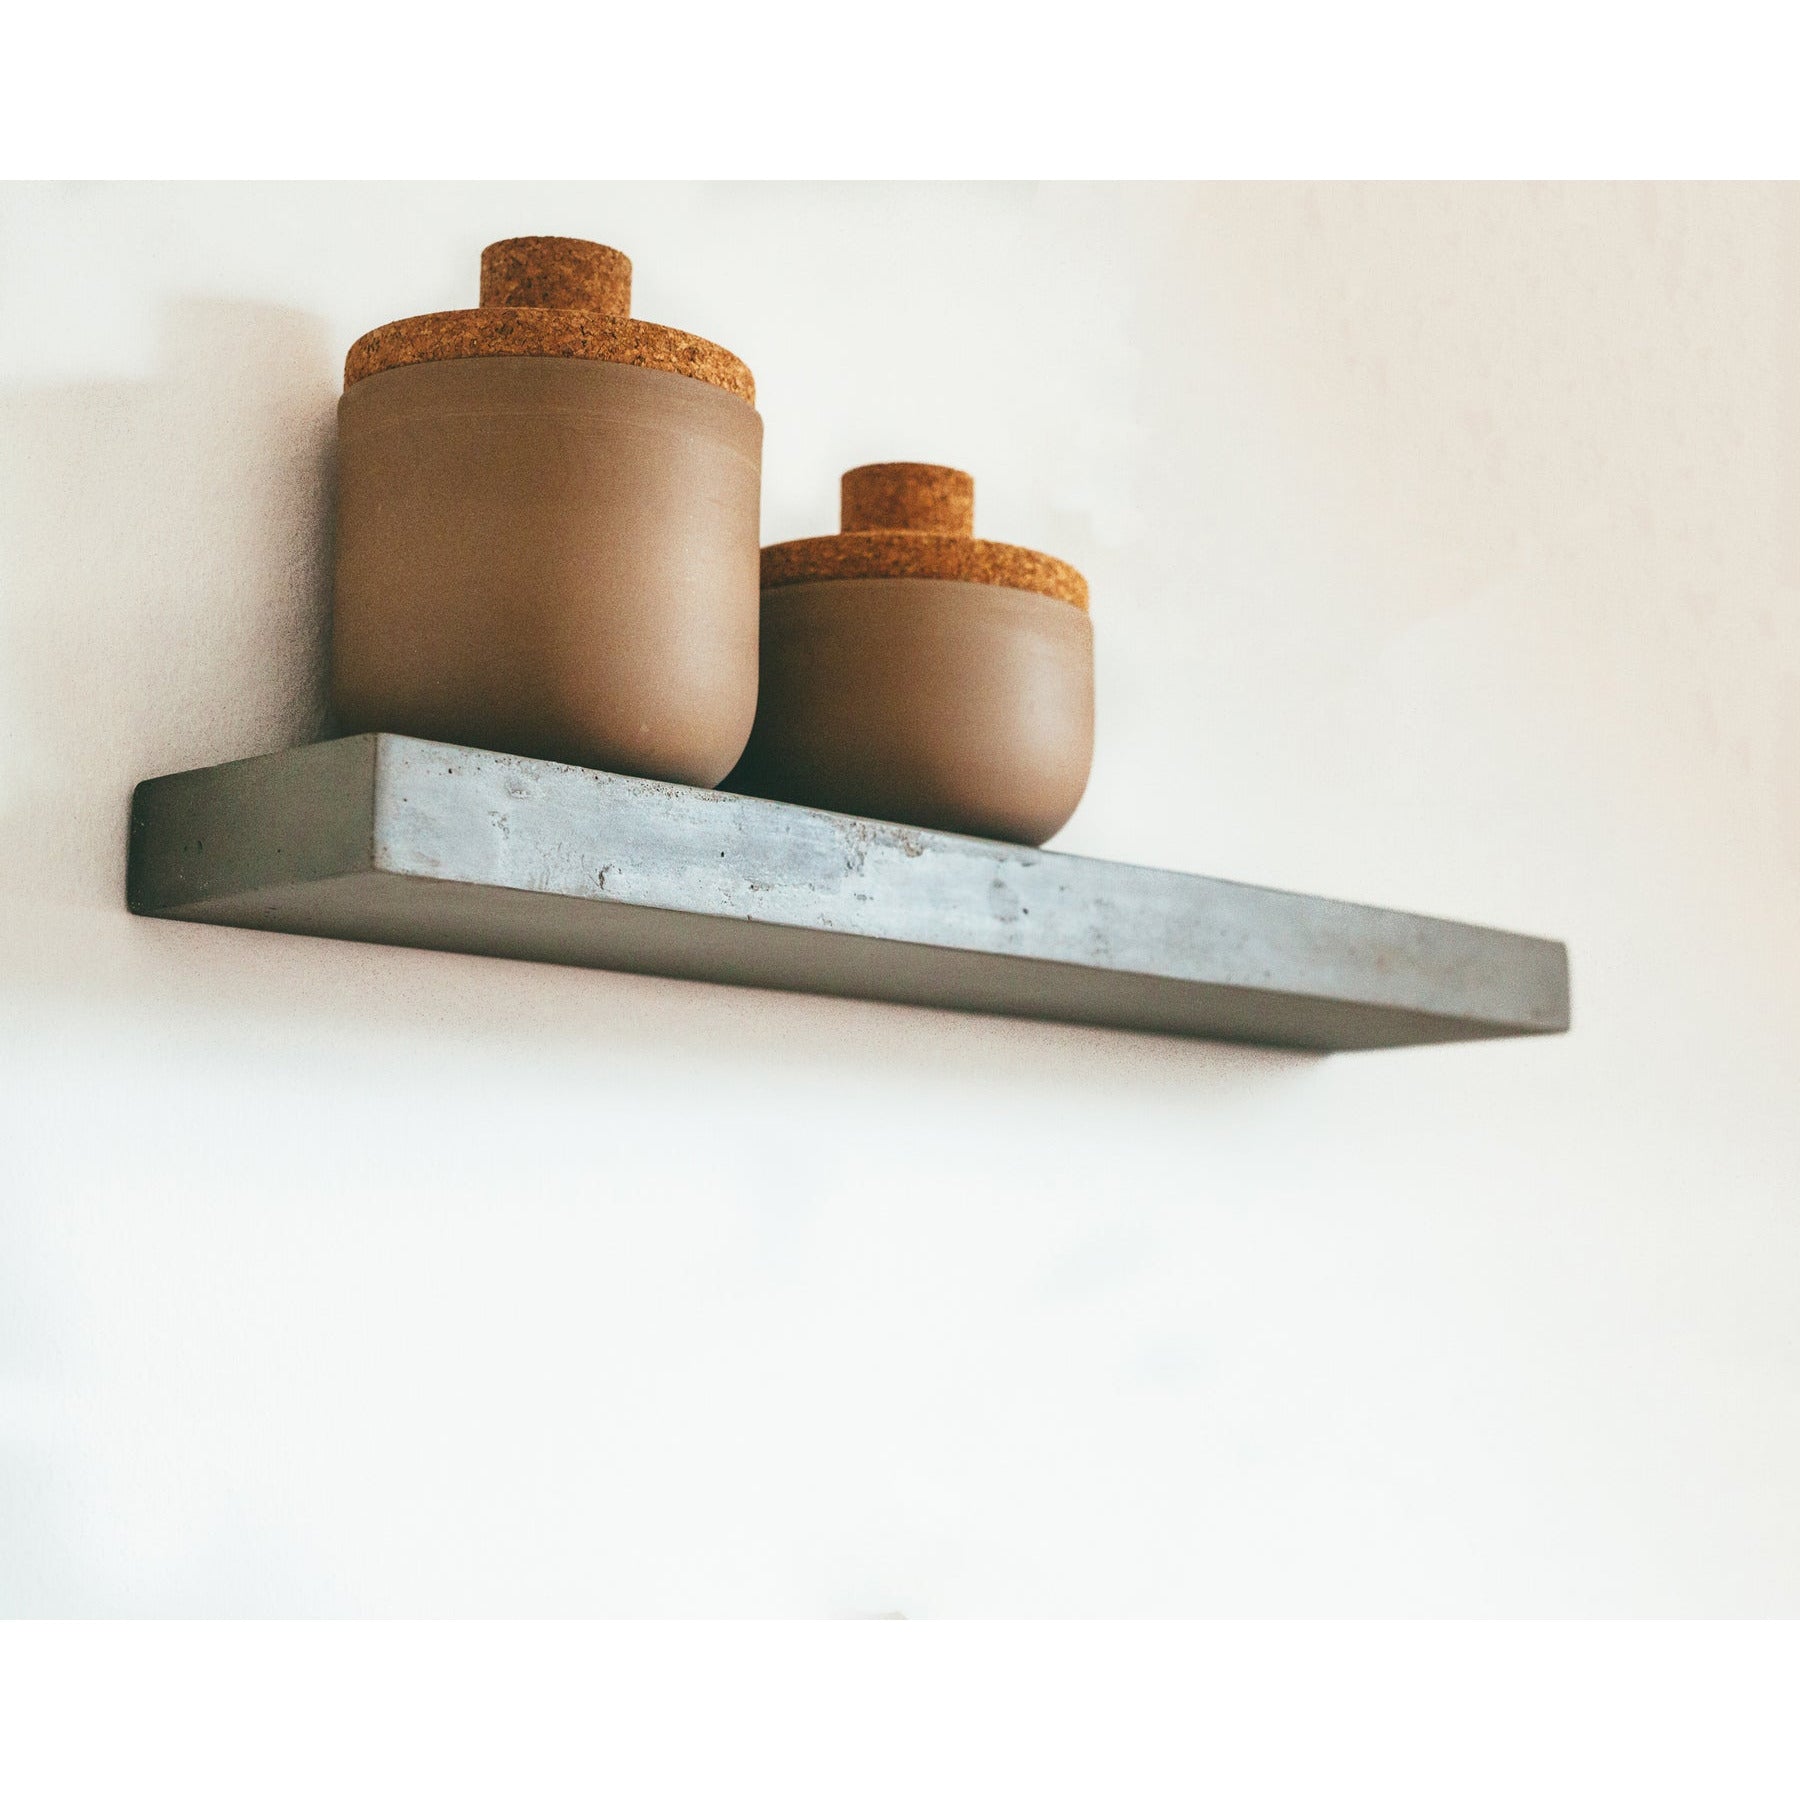 Lyon Beton Sliced Shelf from Concrete - Small | Modern Furniture + Decor